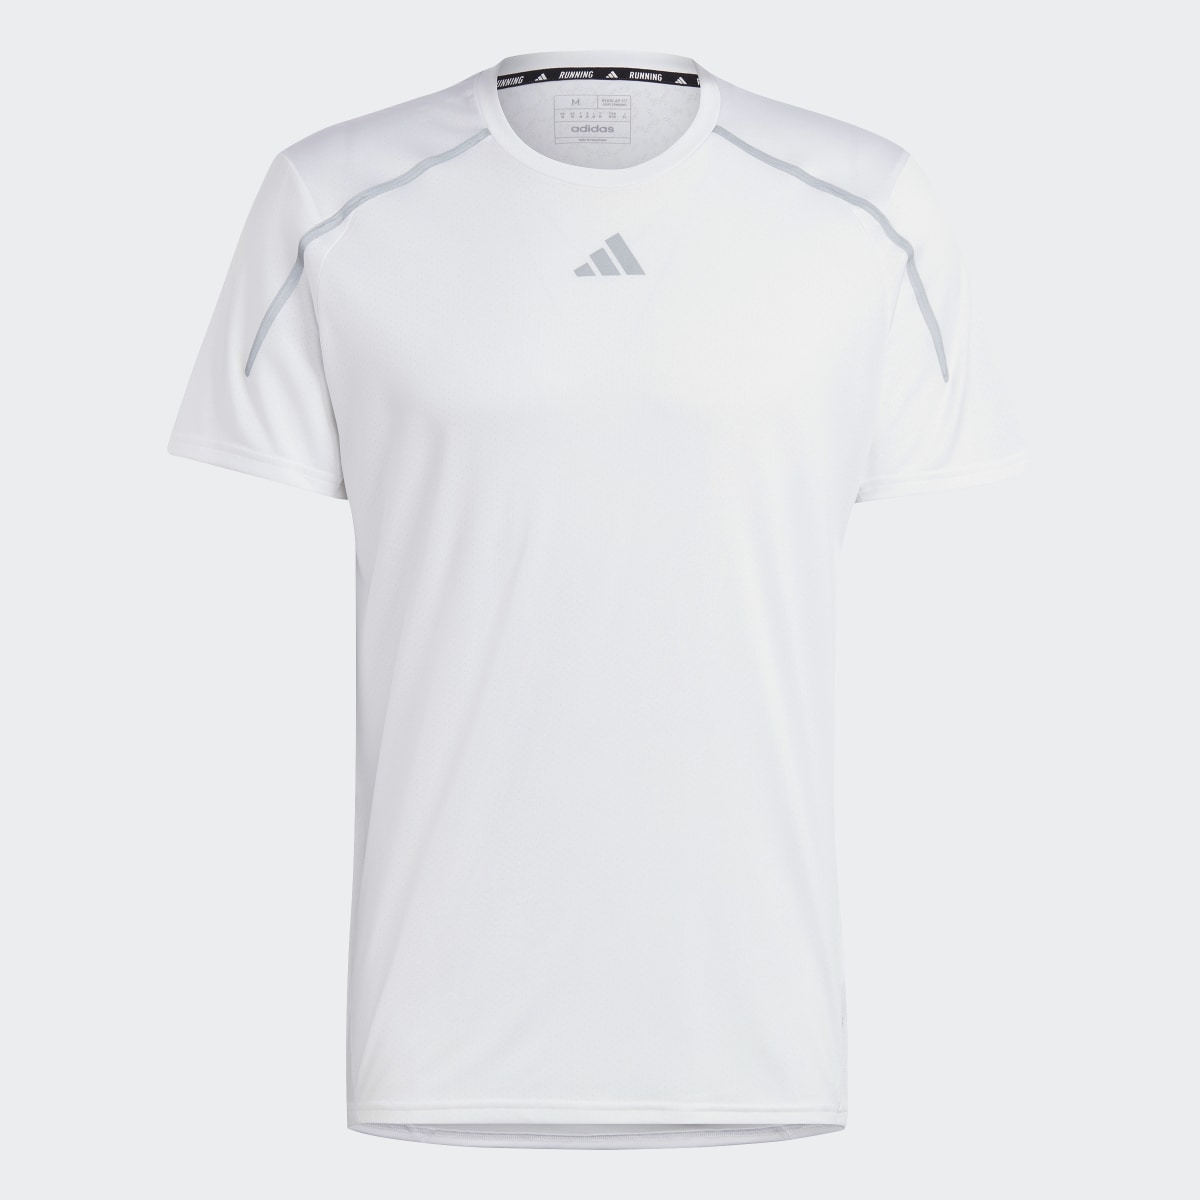 Adidas T-shirt Confident. 5